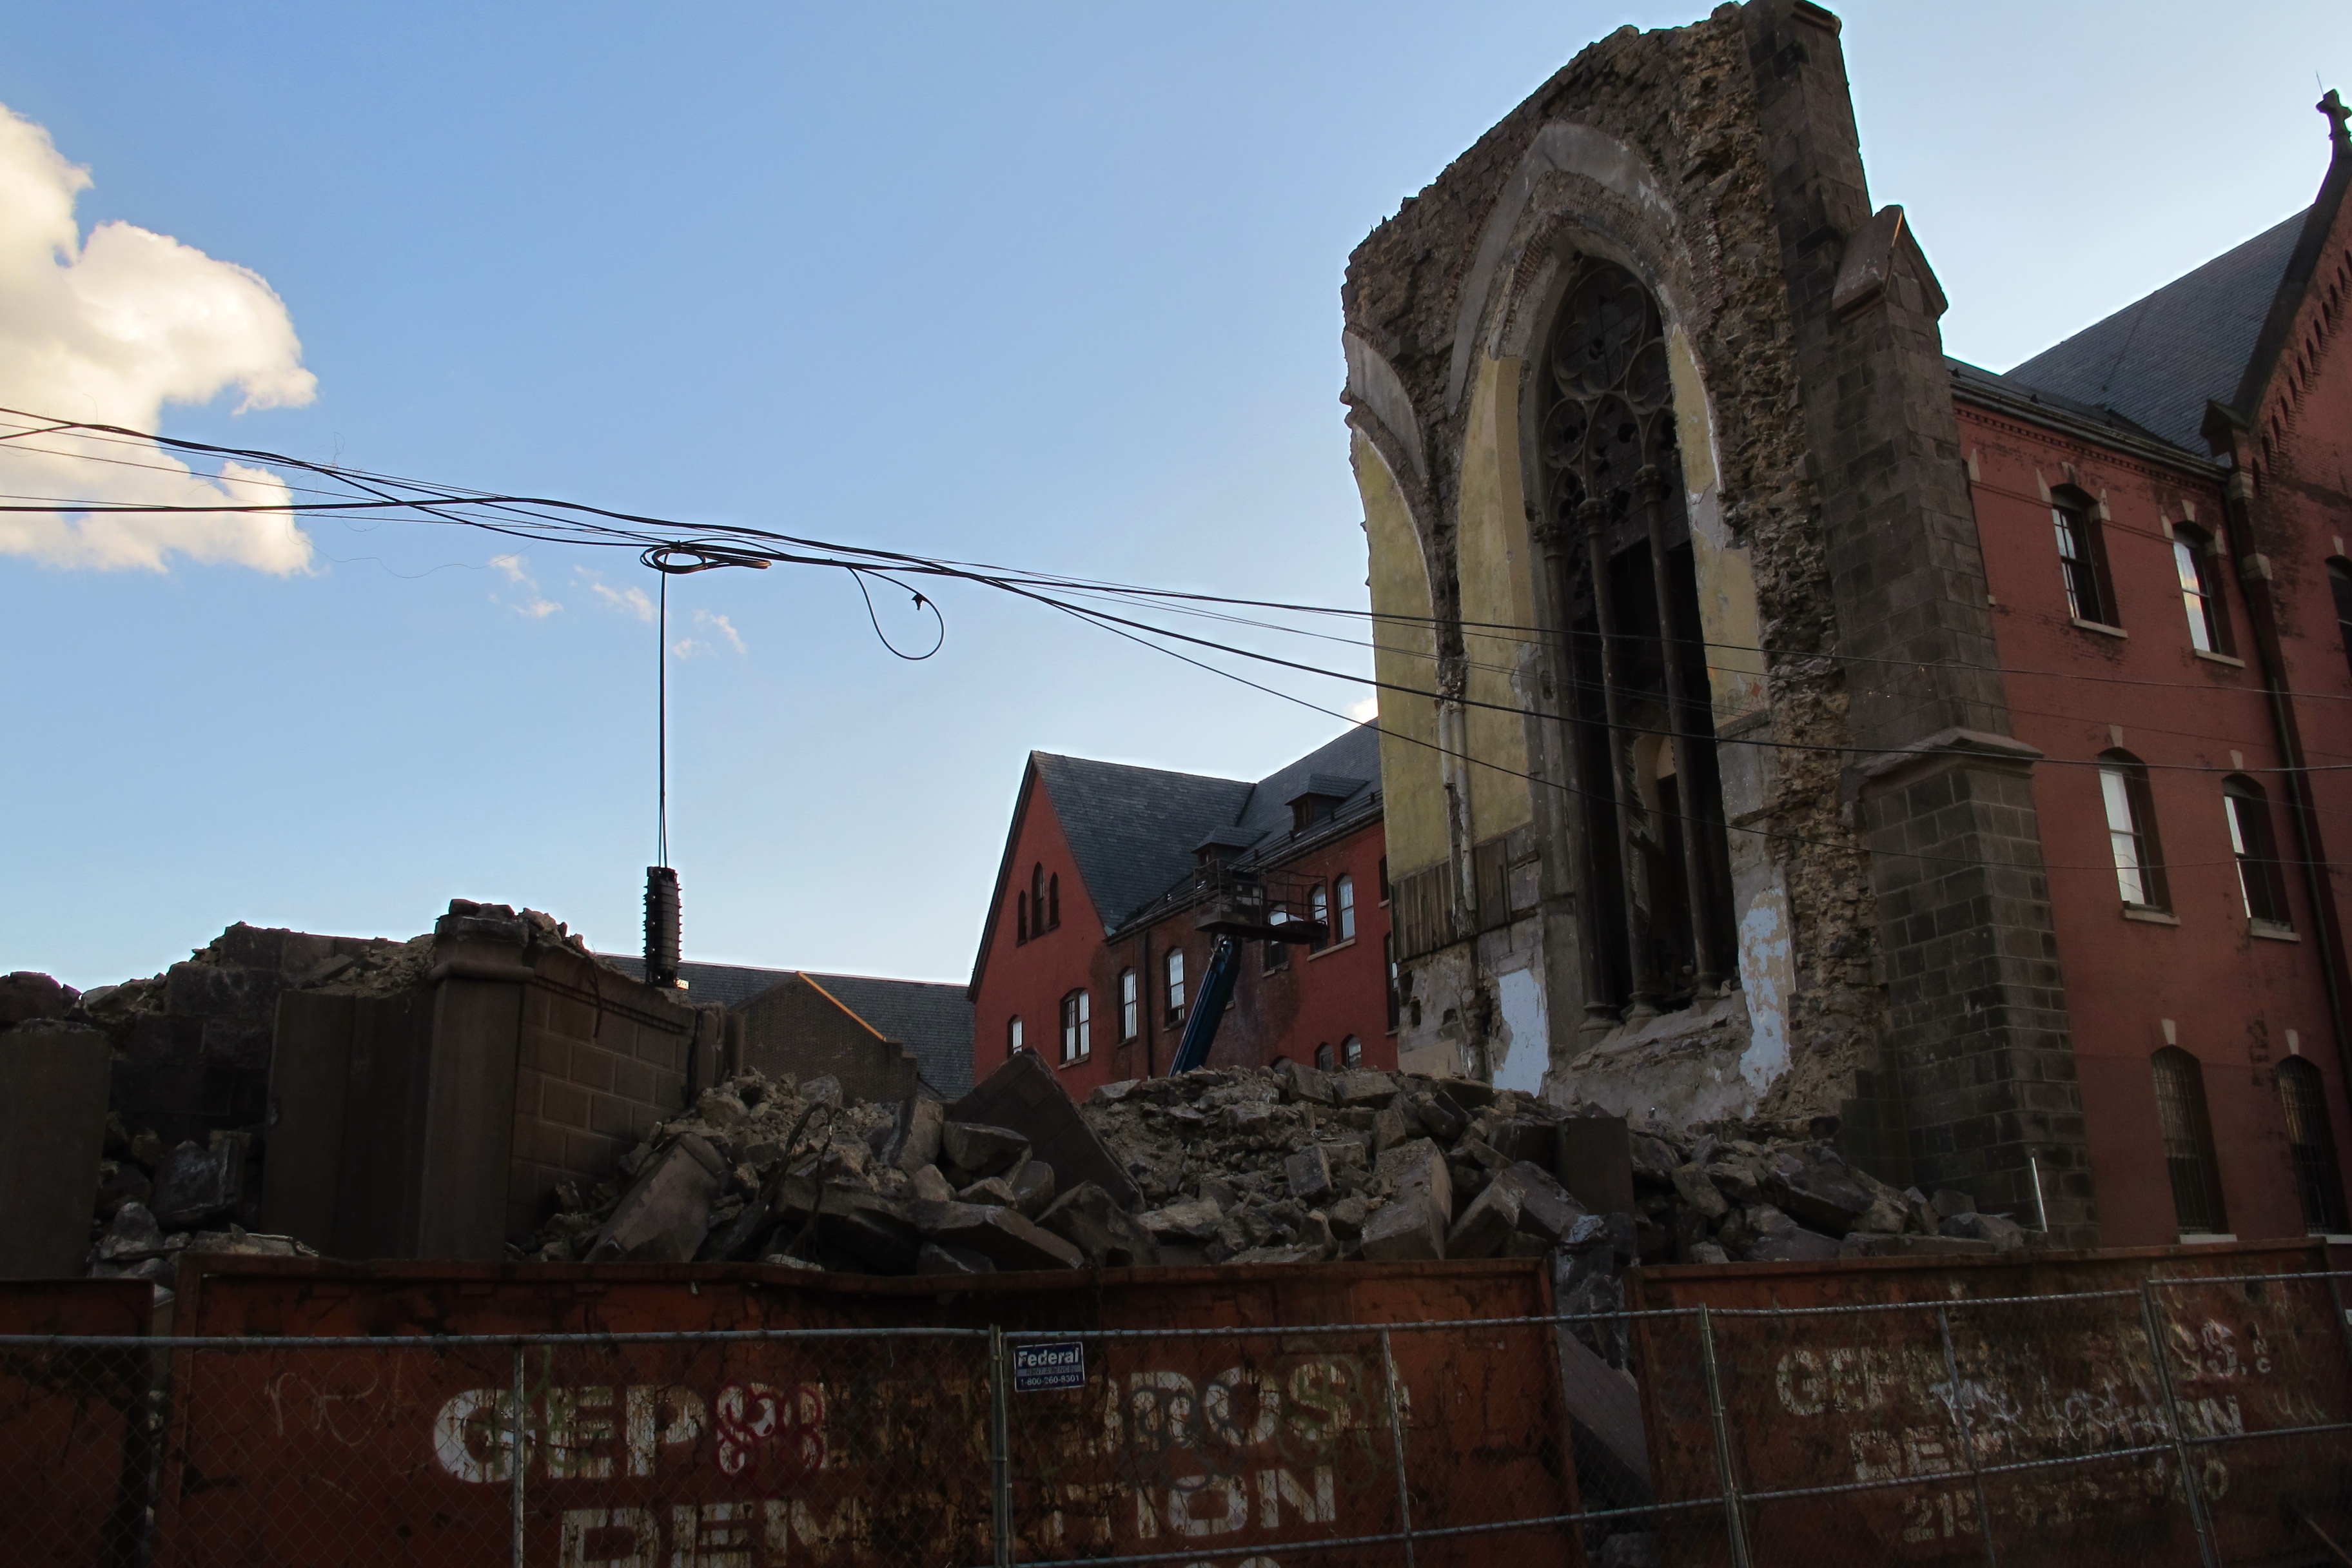 St. Boniface Church was demolished in April, 2012